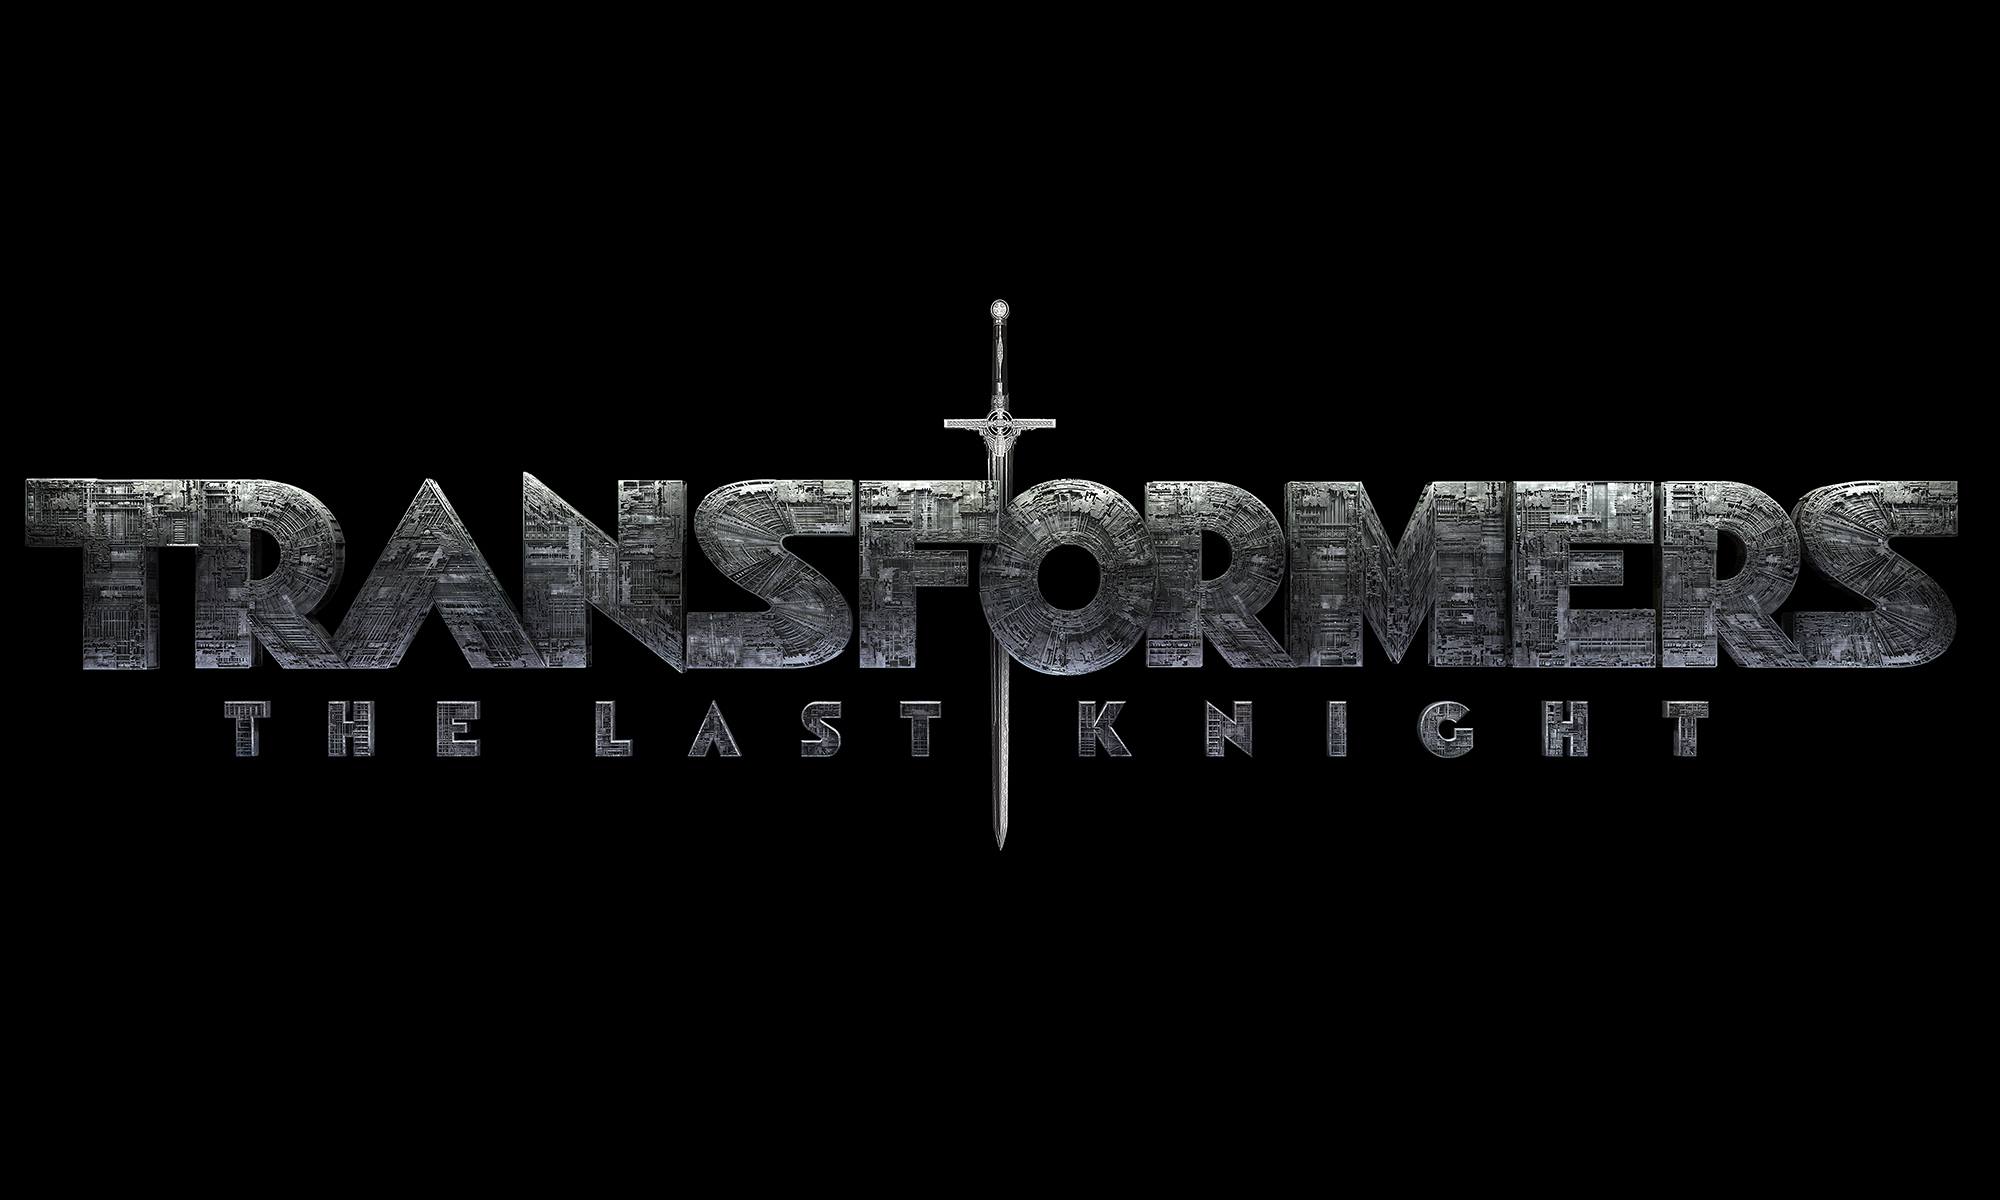 transformers last knight Transformers 5 Titled "The Last Knight"